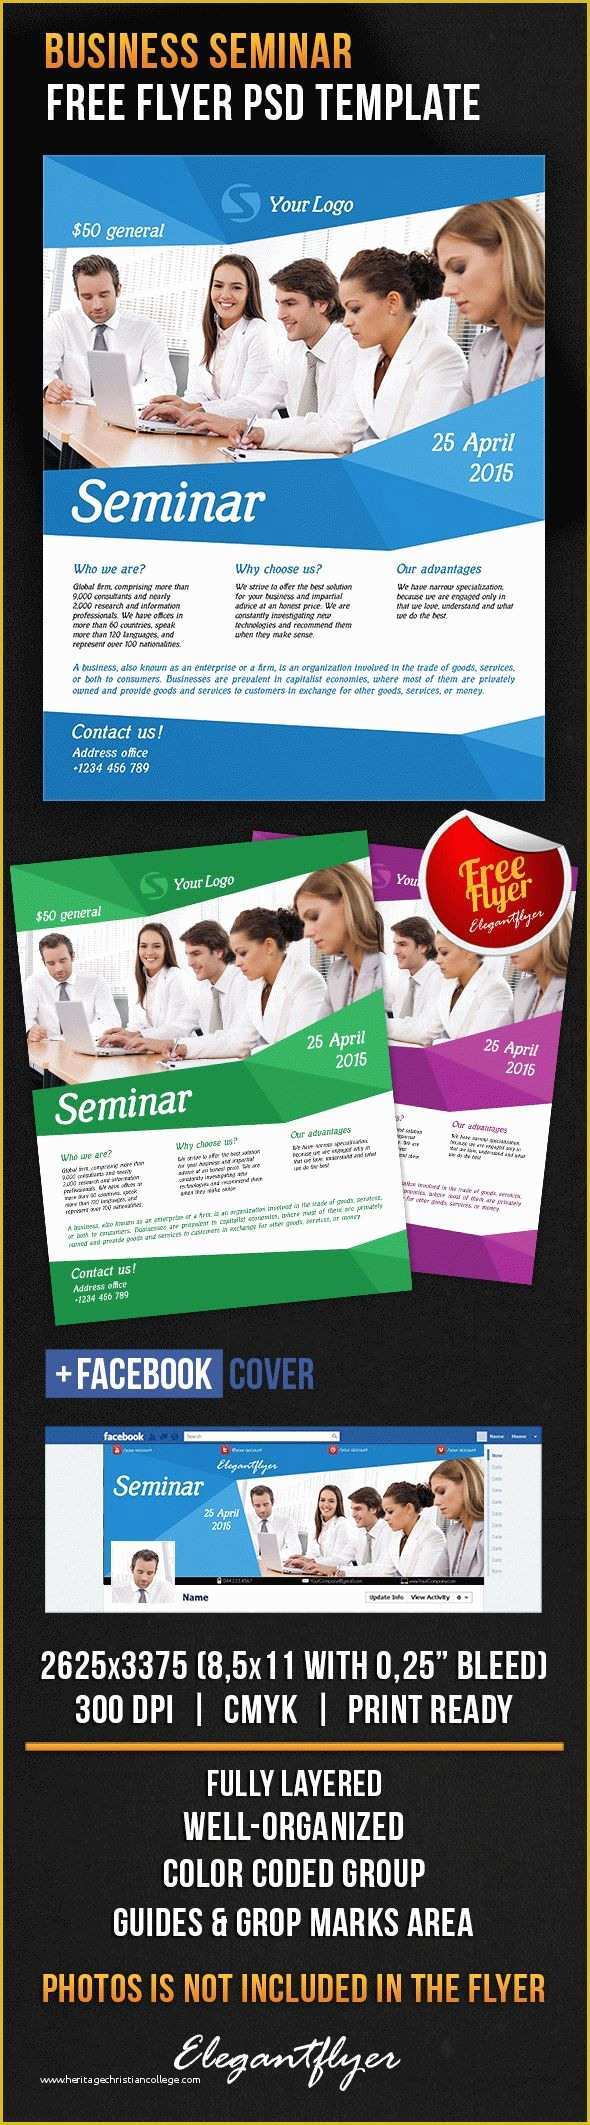 Custom Flyer Templates Free Of Business Seminar – Free Flyer Psd Template – by Elegantflyer